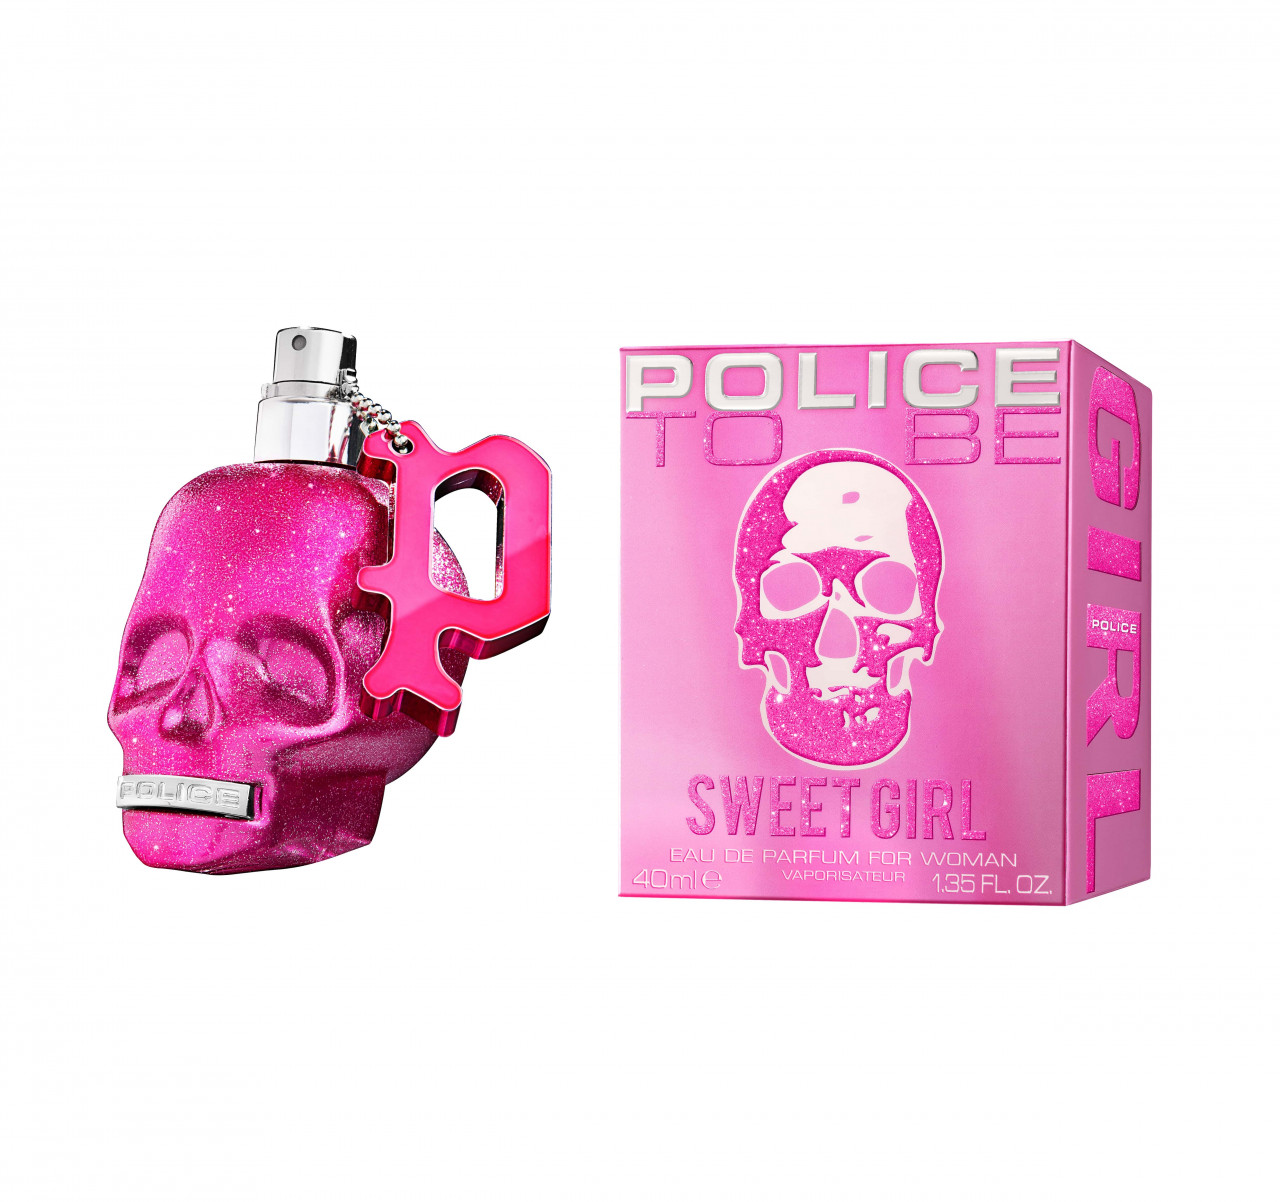 Police - To Be Sweet Girl Eau de Parfum -  40 ml